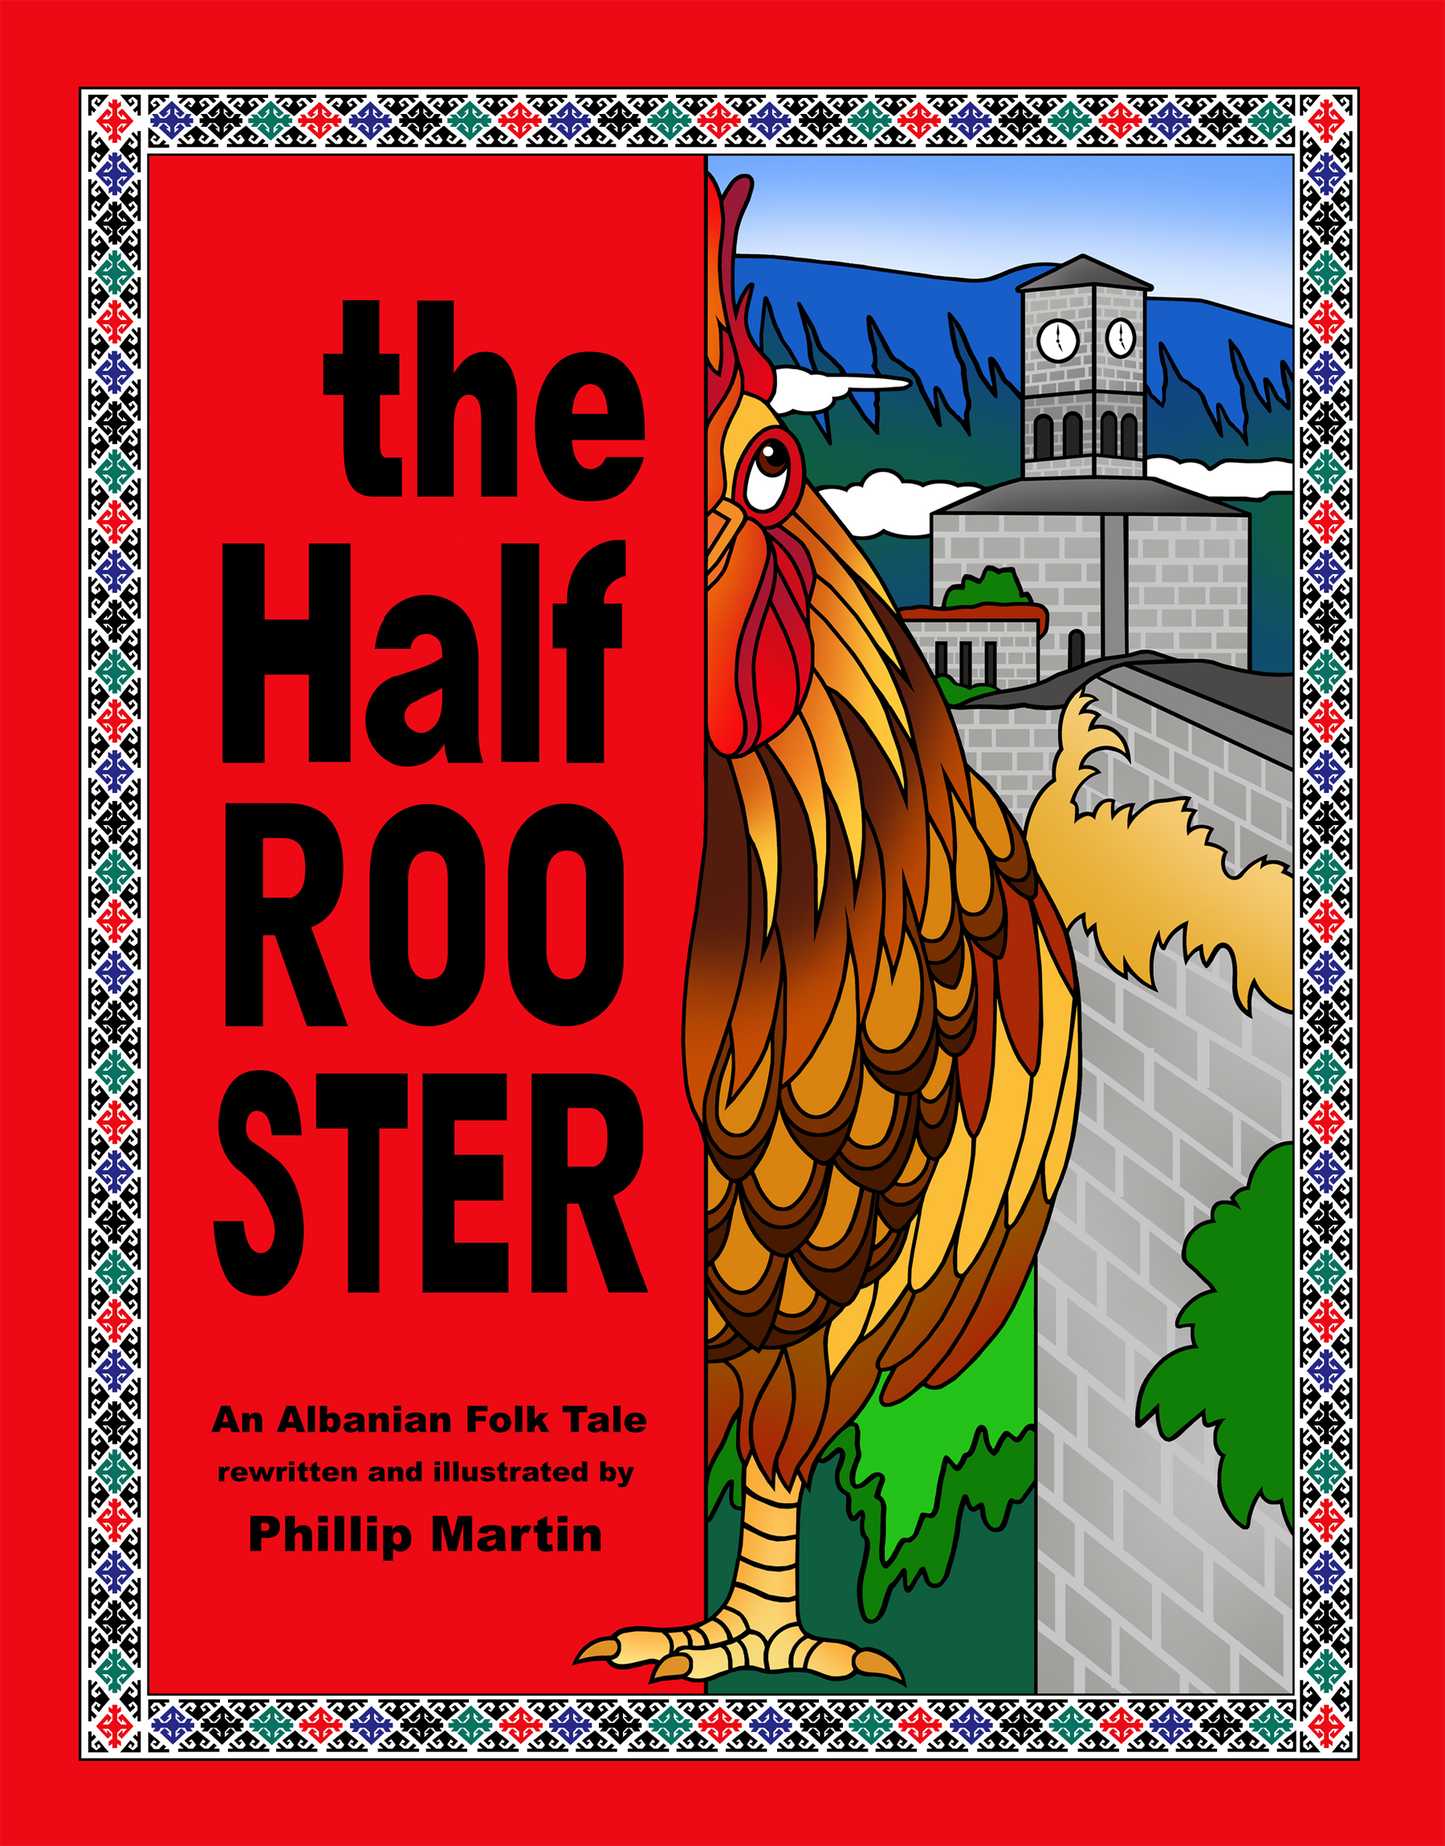 The Half Rooster – An Albanian Folk Tale